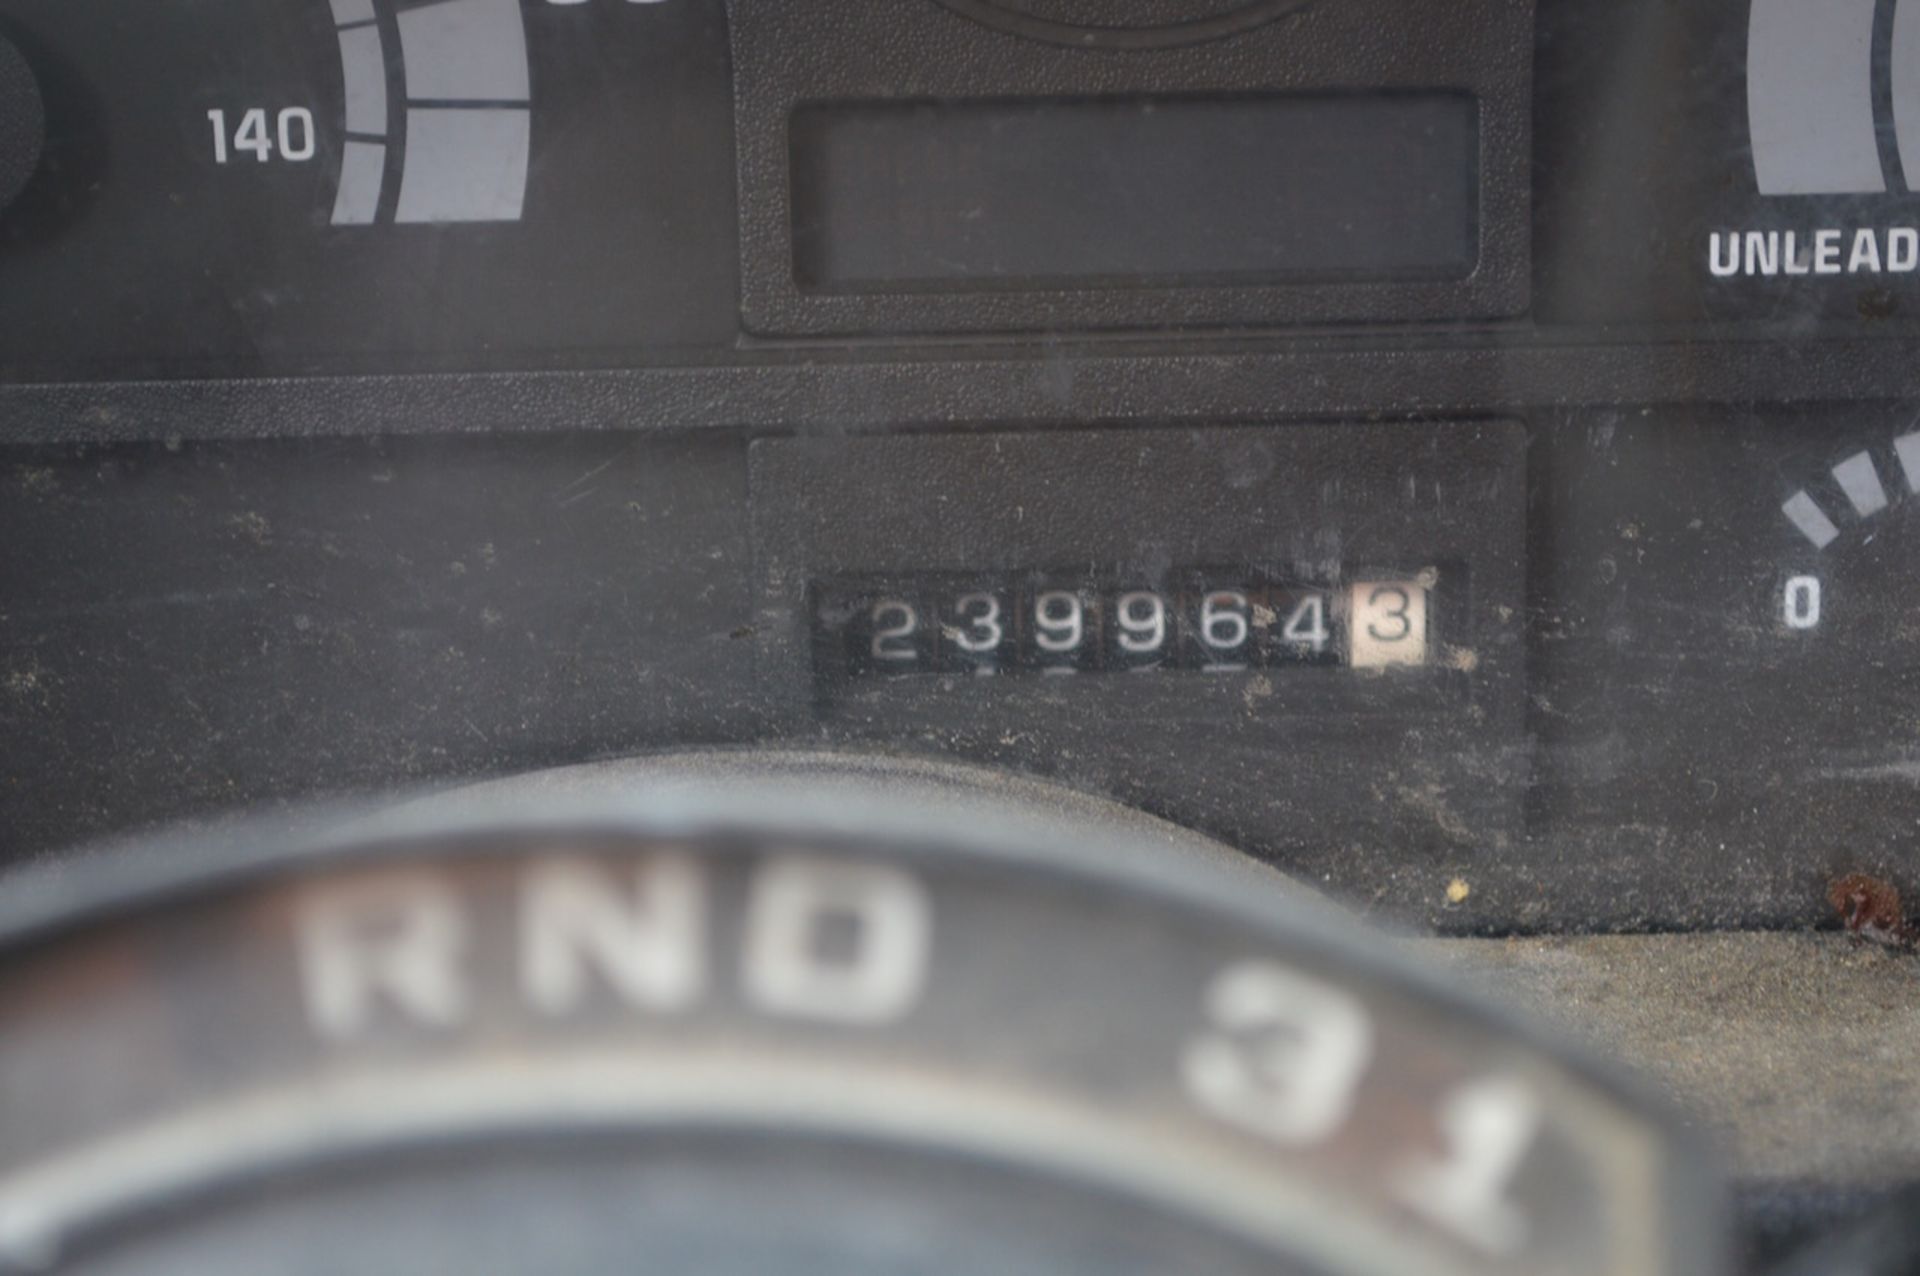 1993 GMC TOP KICK SINGLE AXLE GAS MOVING VAN: VIN NO. 1GDJ6H1P5PJ507814; 239,964 Miles; Automatic - Image 5 of 6